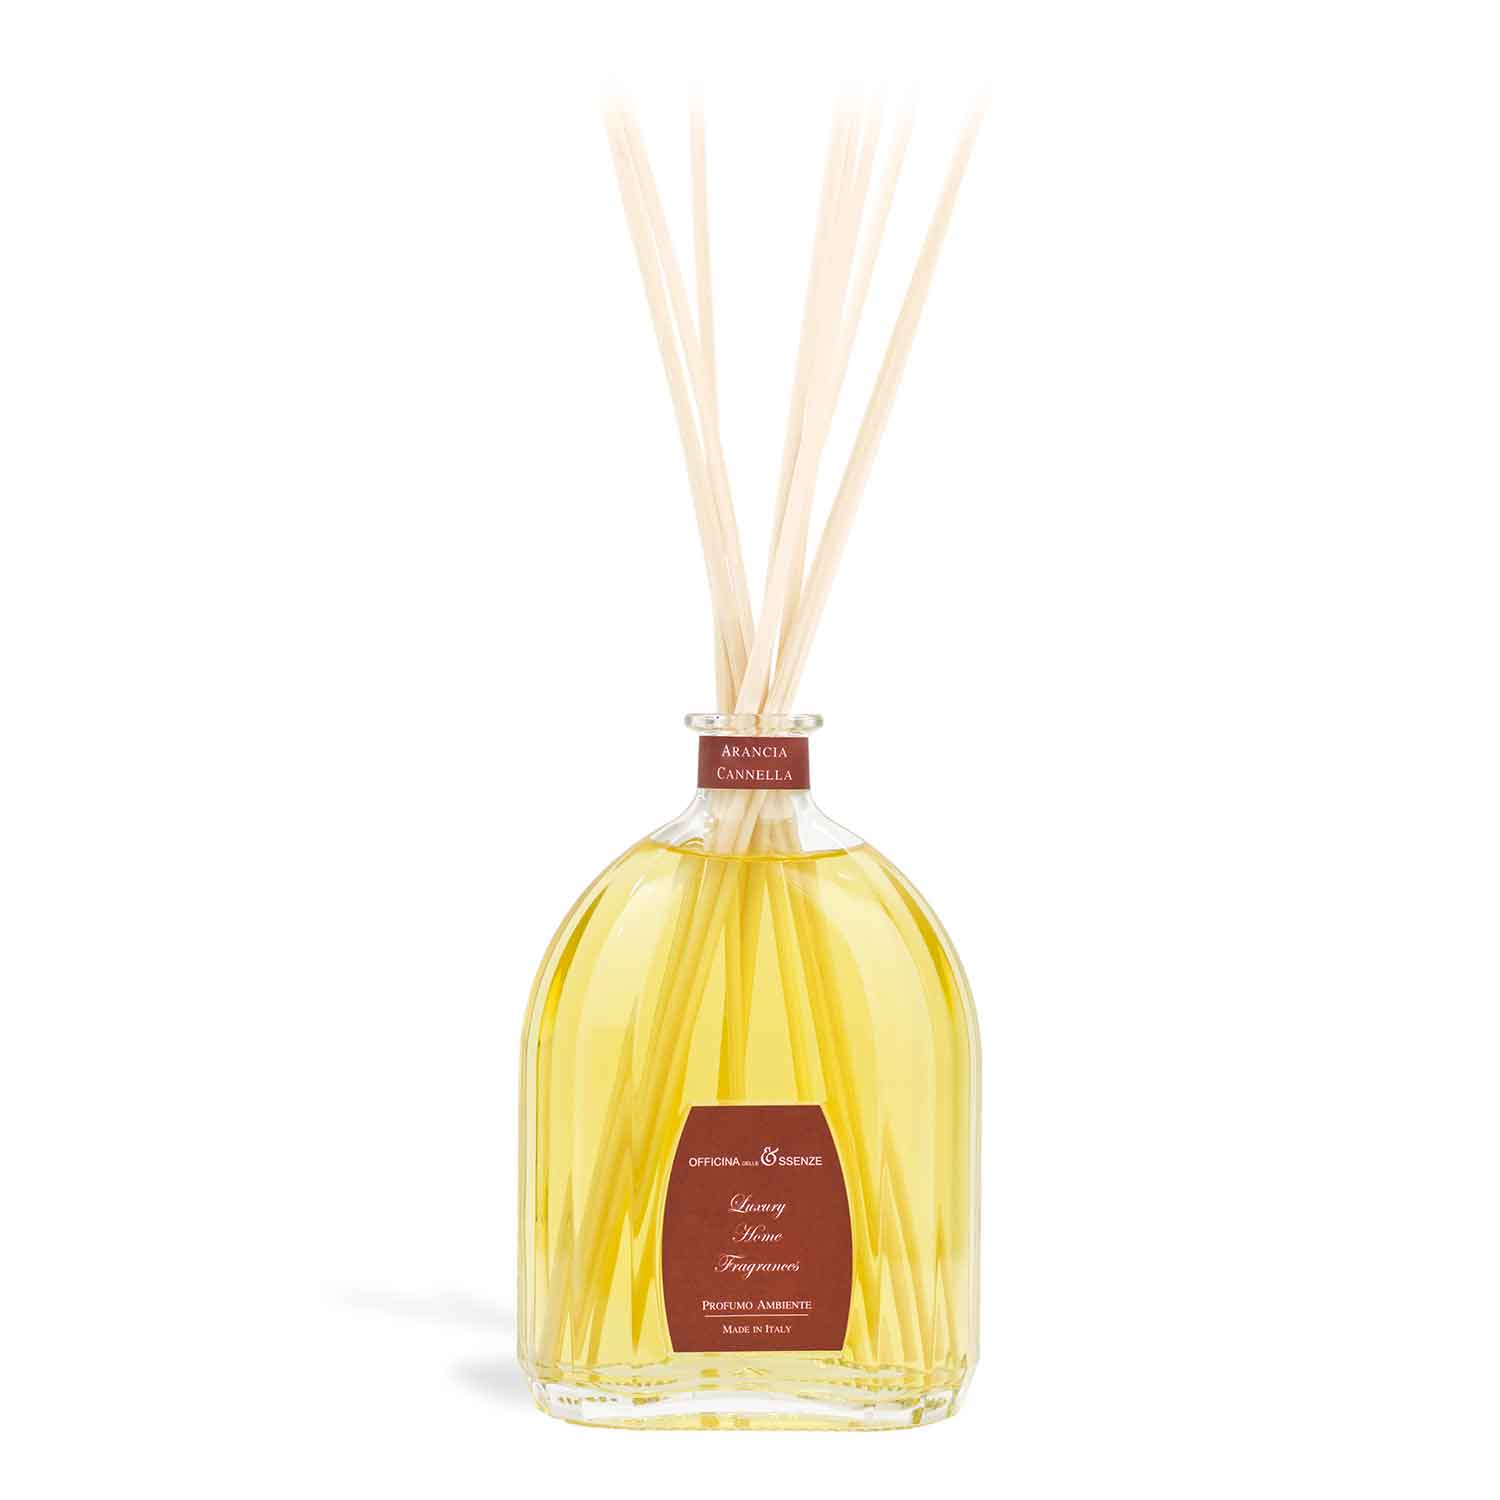 Arancia Cannella - Home fragrance diffuser with essential oils, 500 ml